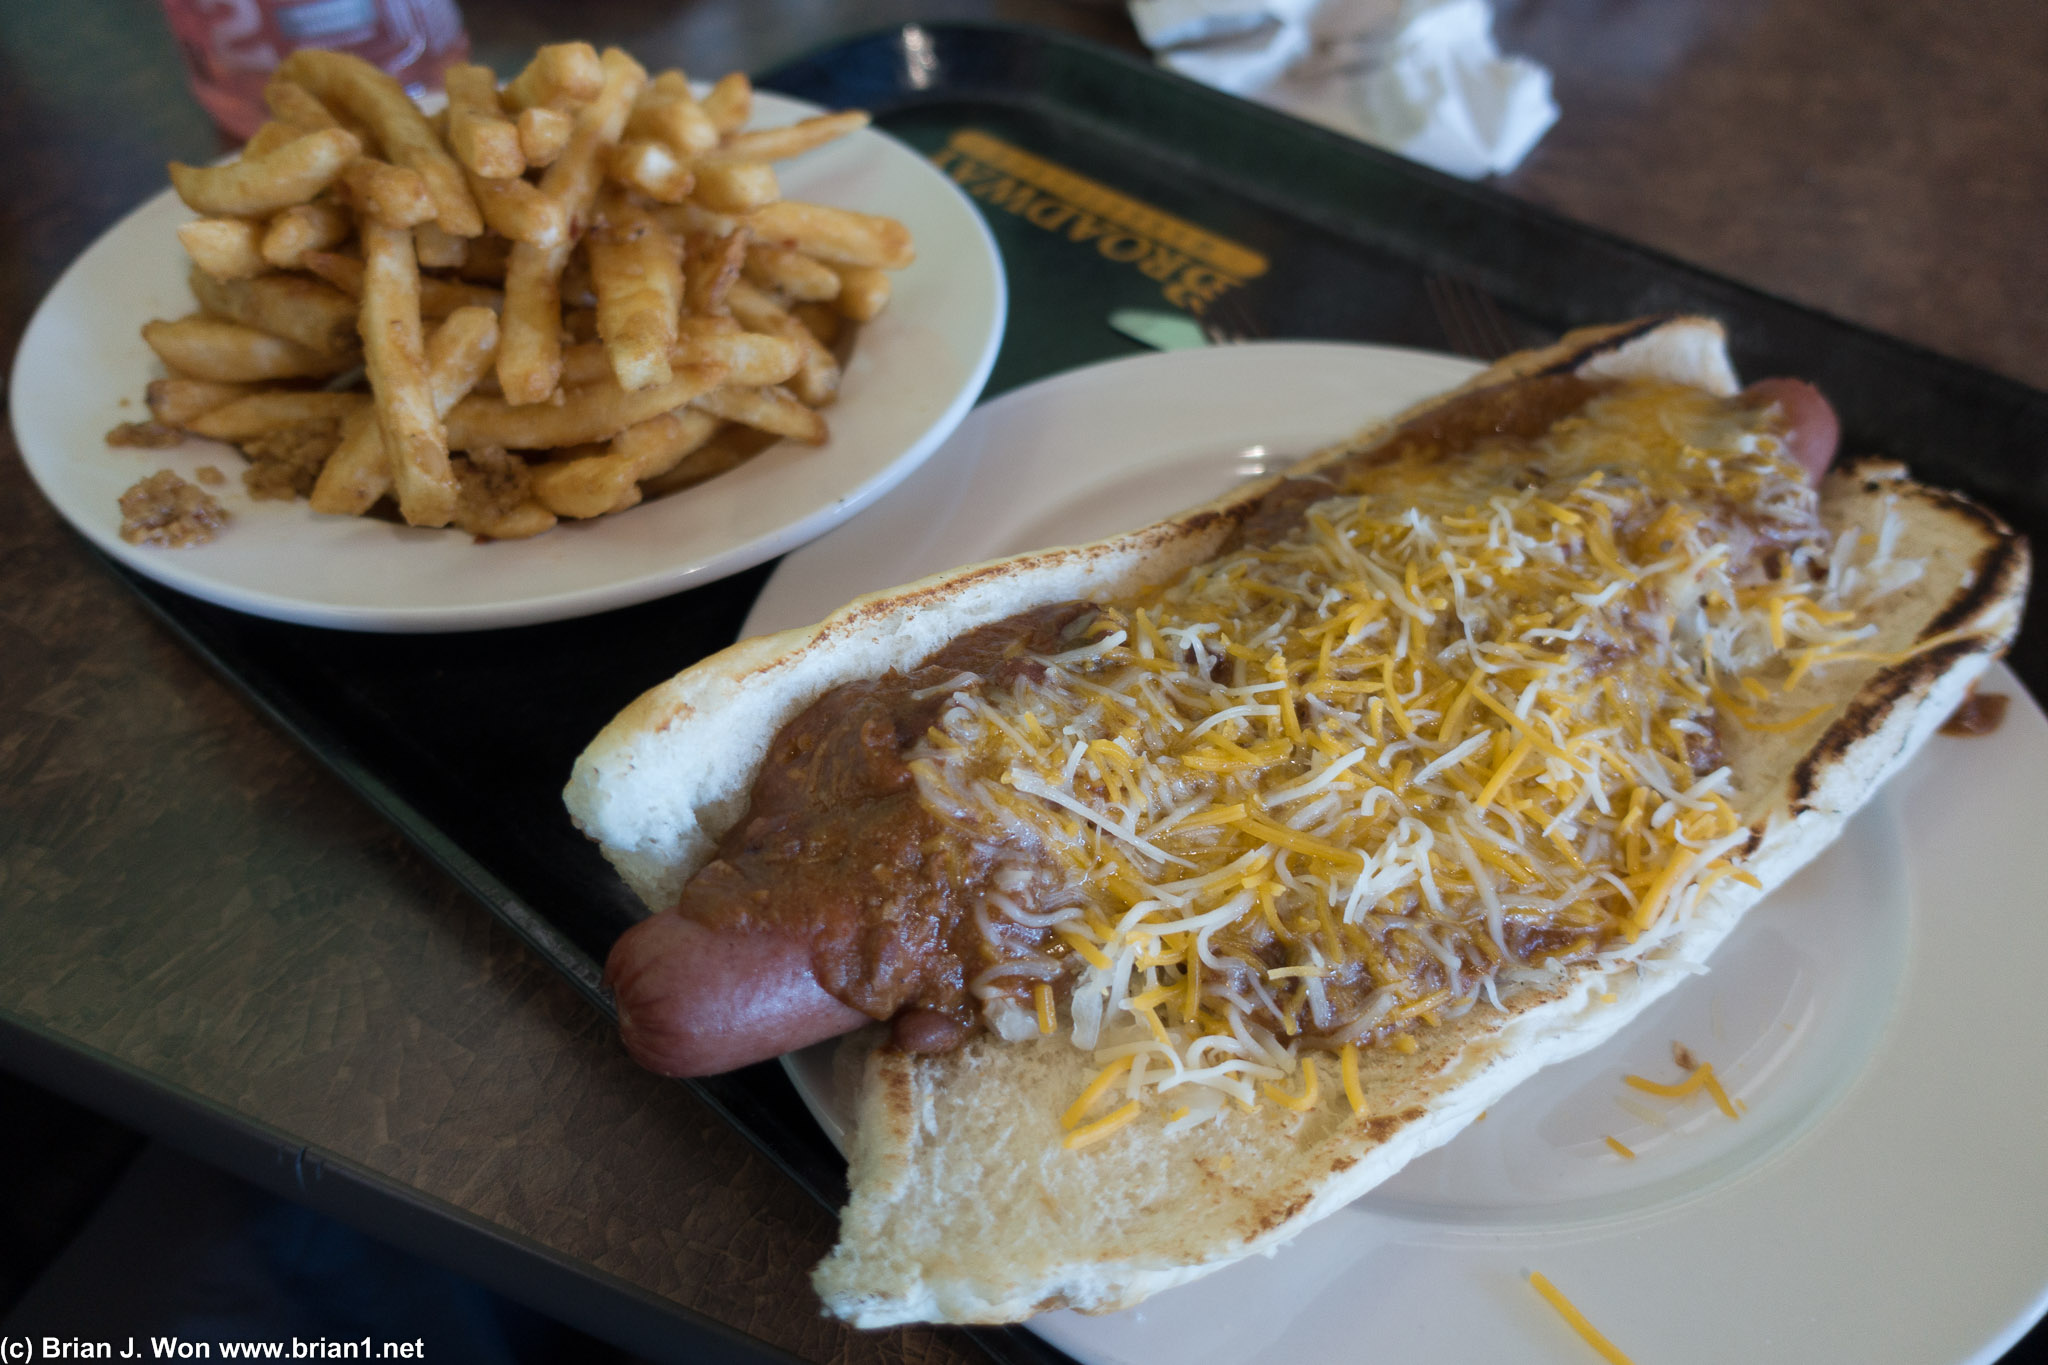 Garlic fries and foot-long chili cheese dog for lunch at Main Lodge.